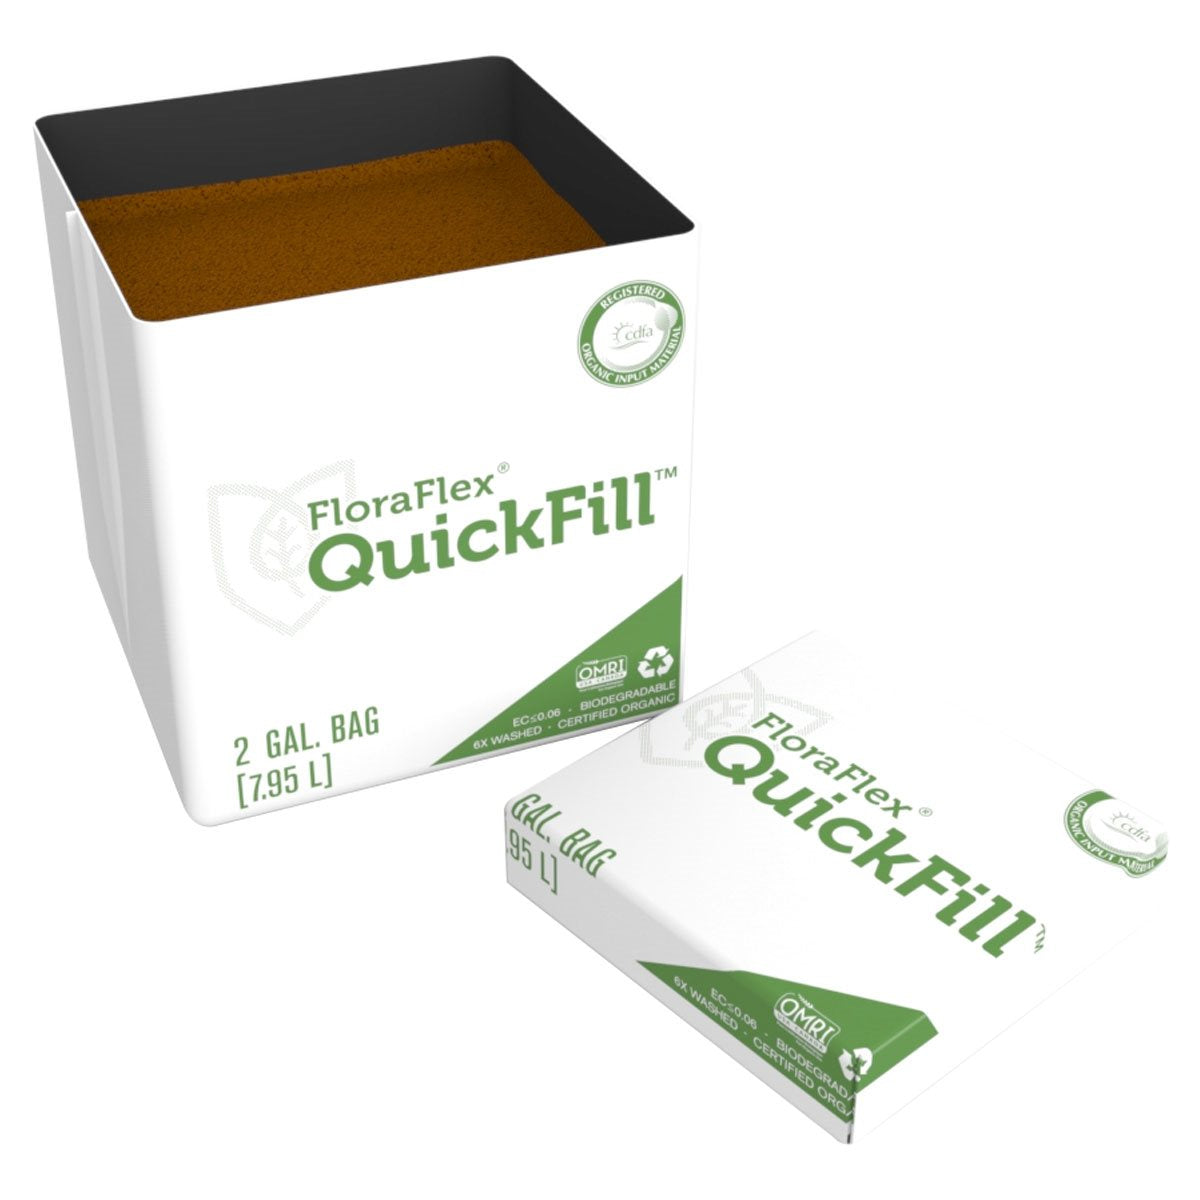 Product Secondary Image:Sac QuickFill FloraFlex